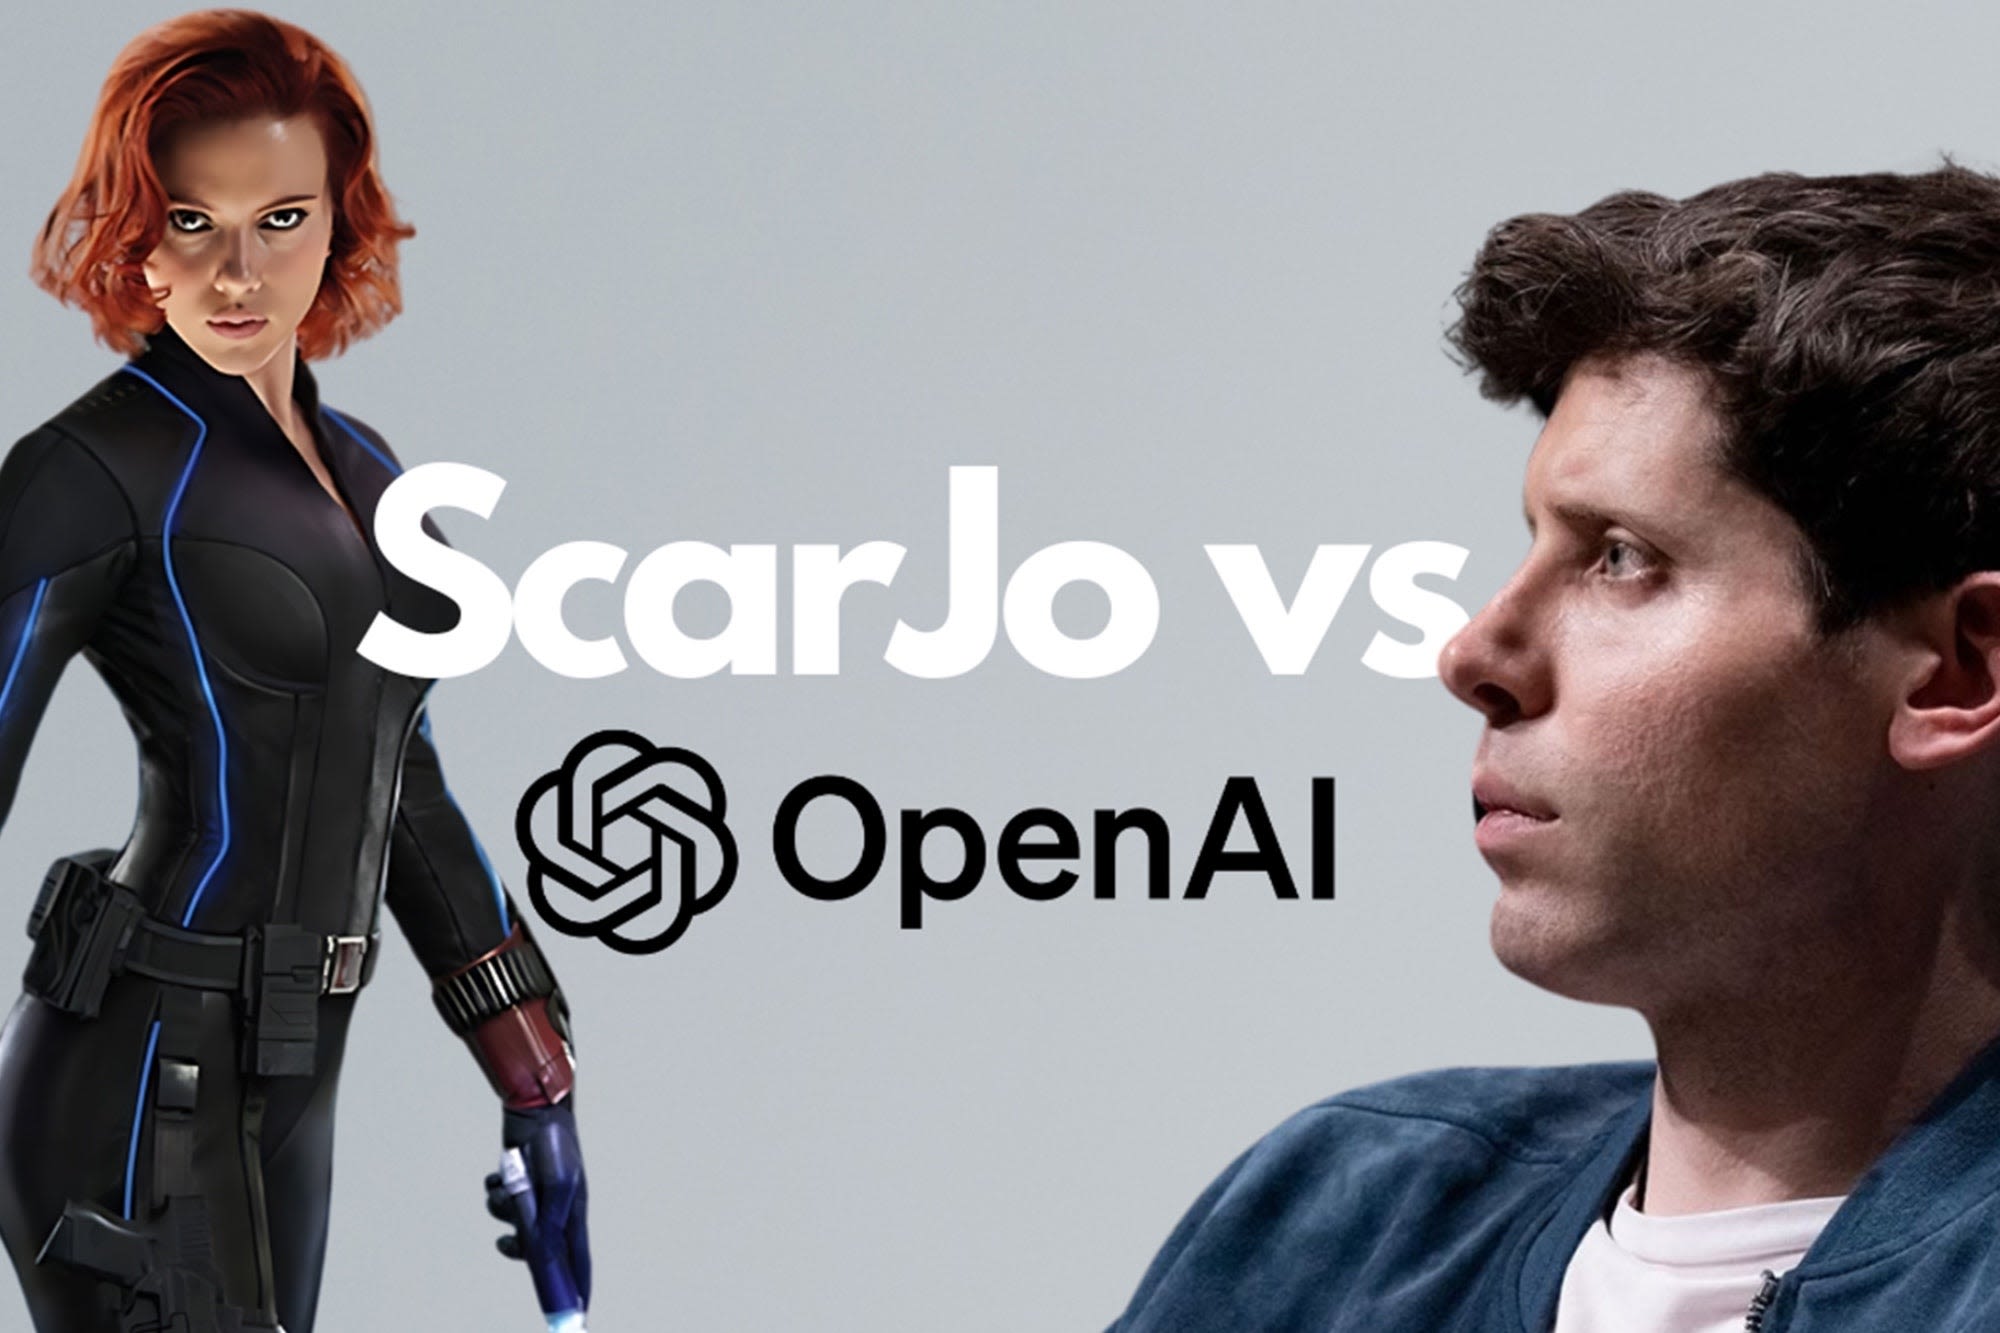 Did OpenAI steal Scarlett Johansson's voice? 5 Critical Lessons for Entrepreneurs in The AI Era | Entrepreneur